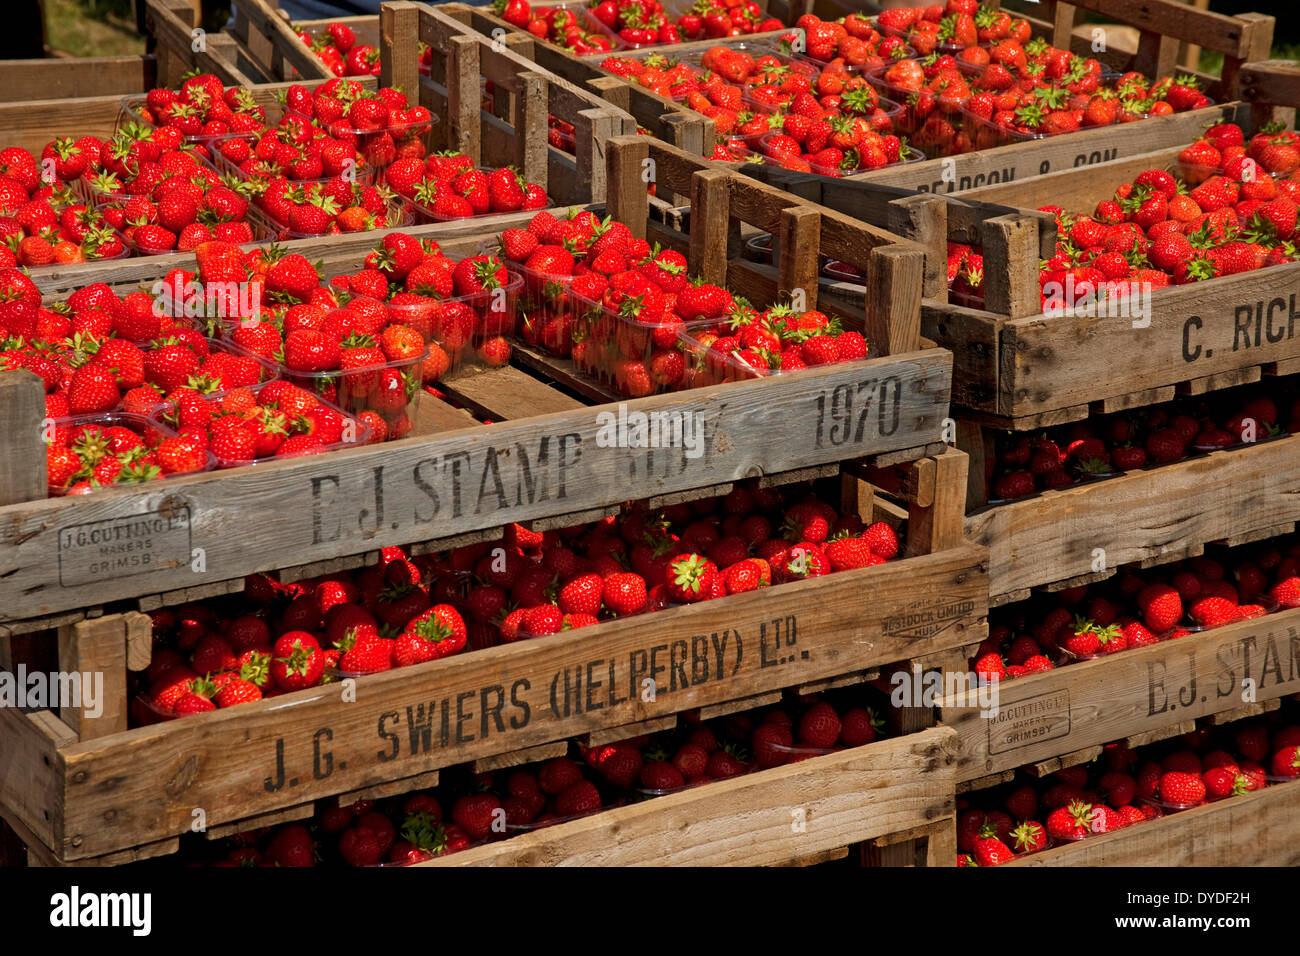 Crates of fresh British strawberries for sale. Stock Photo